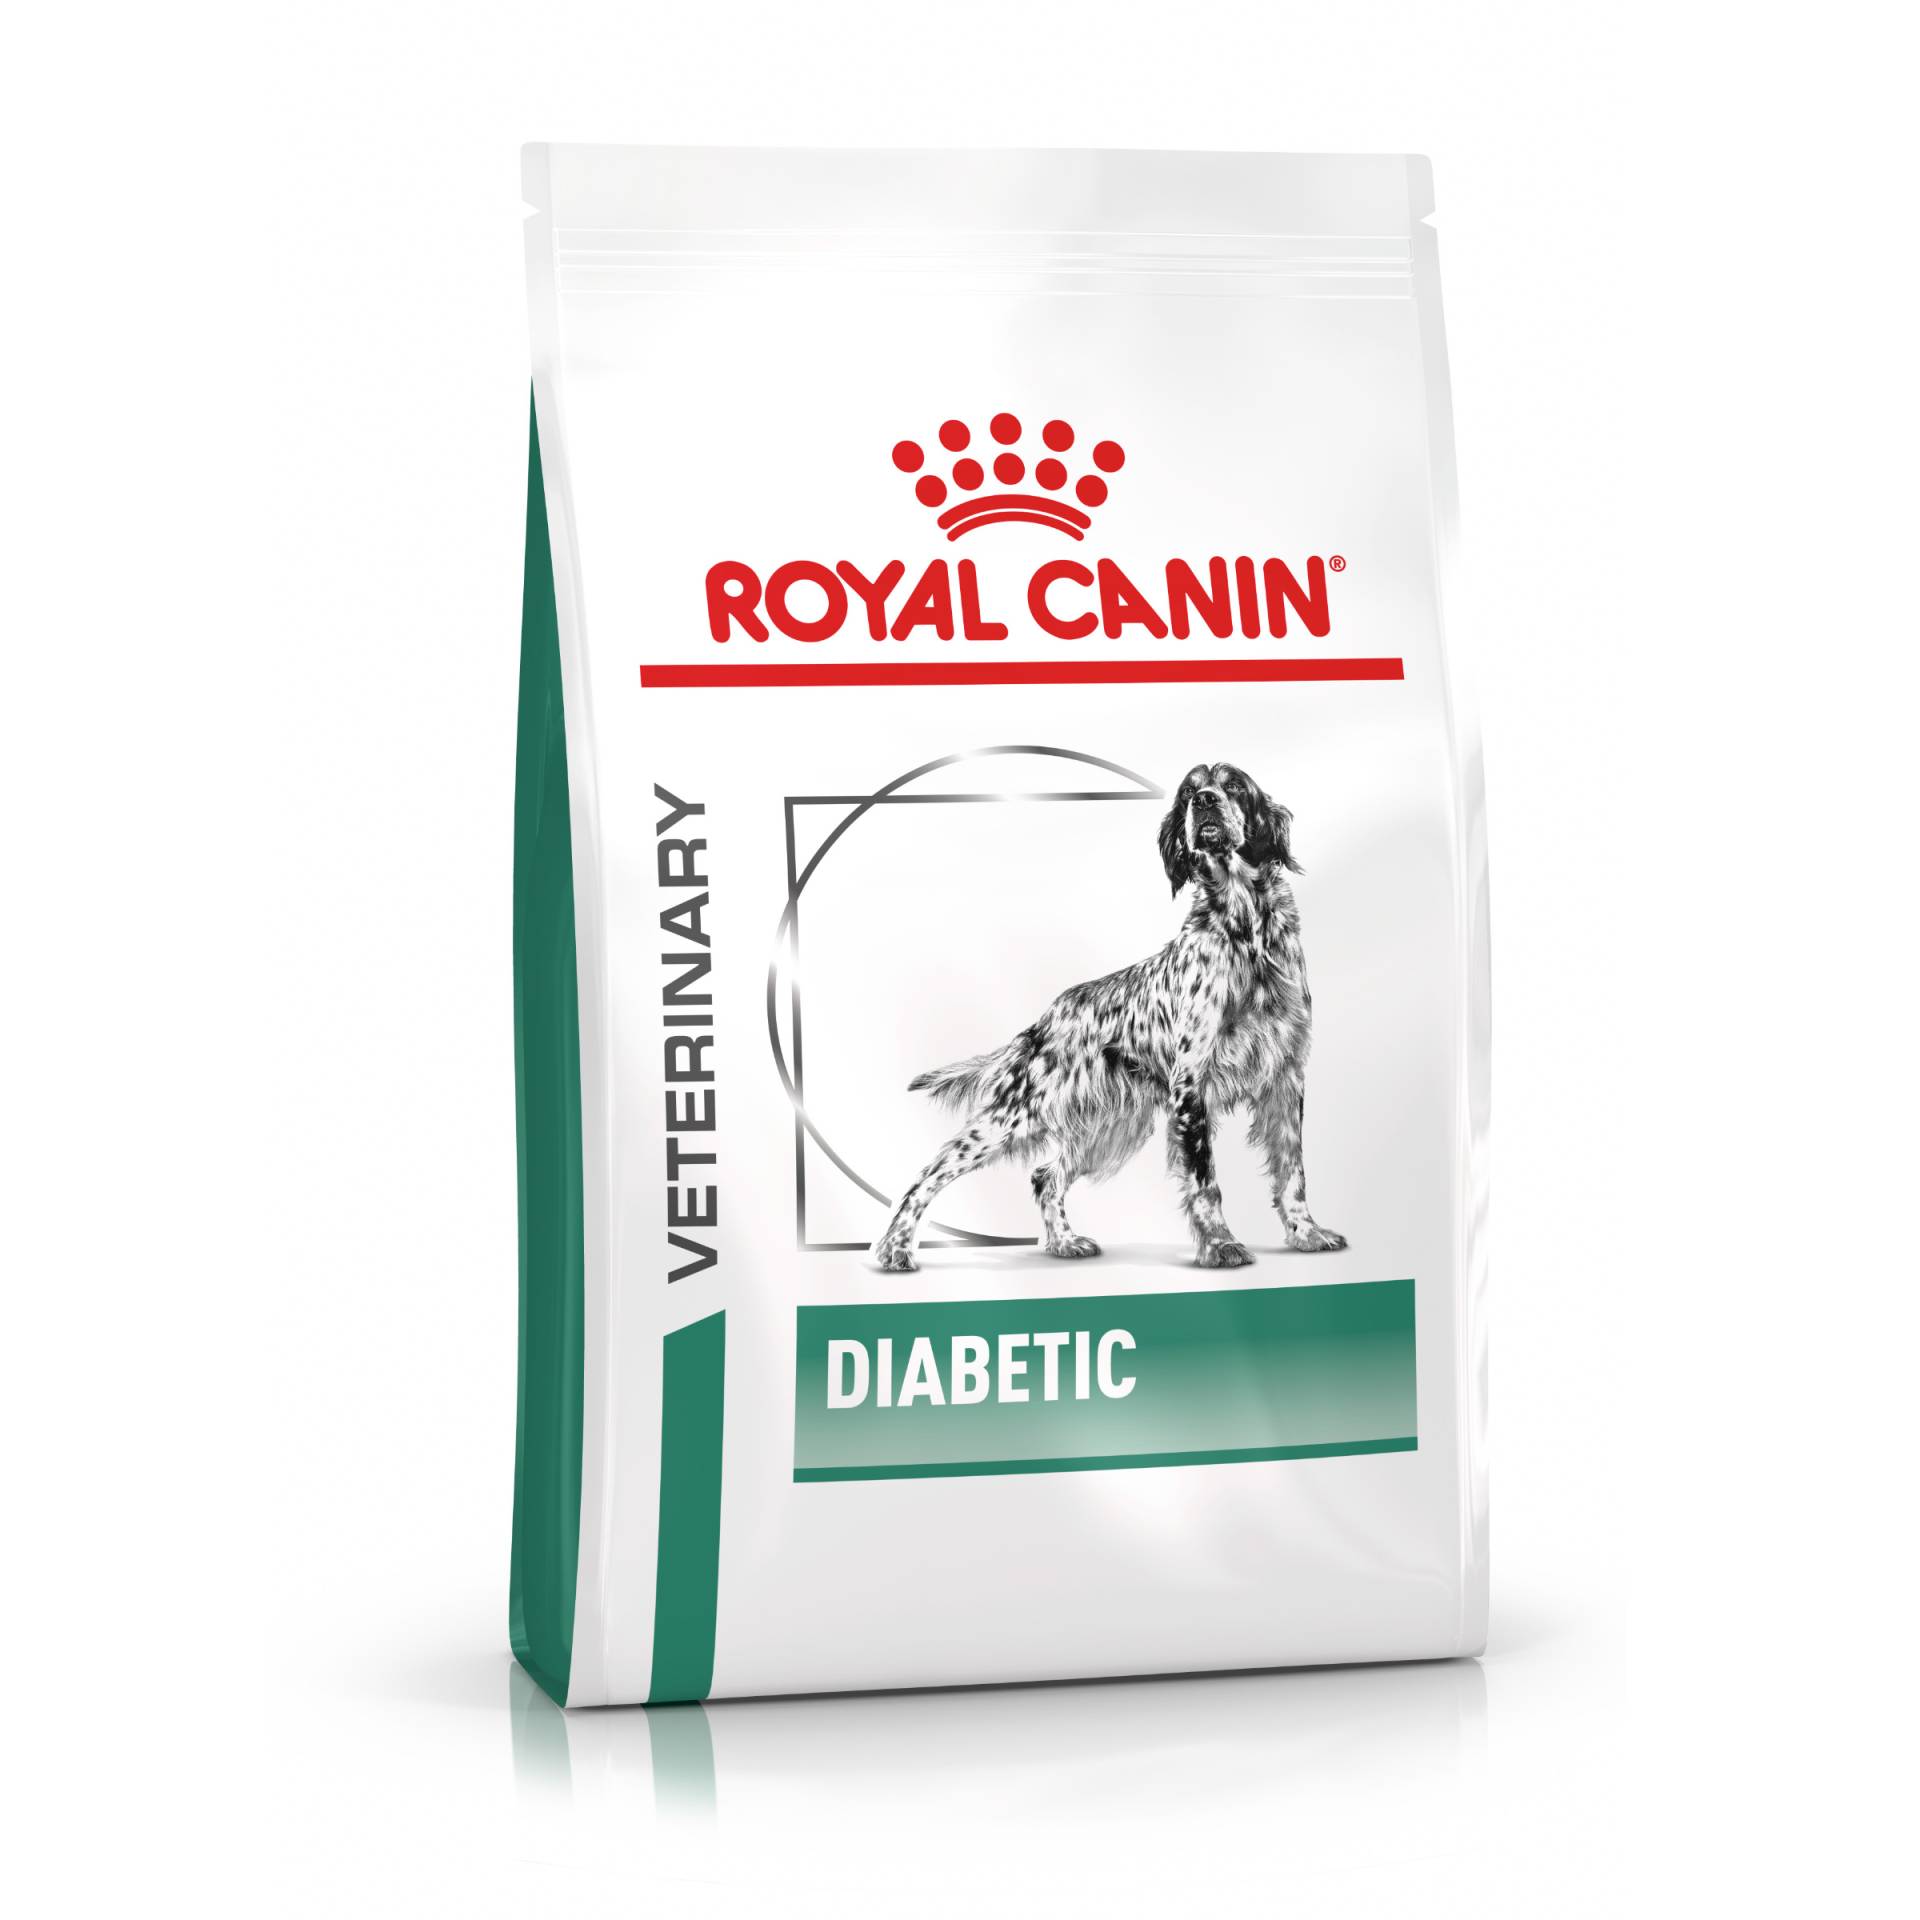 Royal Canin Veterinary Canine Diabetic - 7 kg von Royal Canin Veterinary Diet